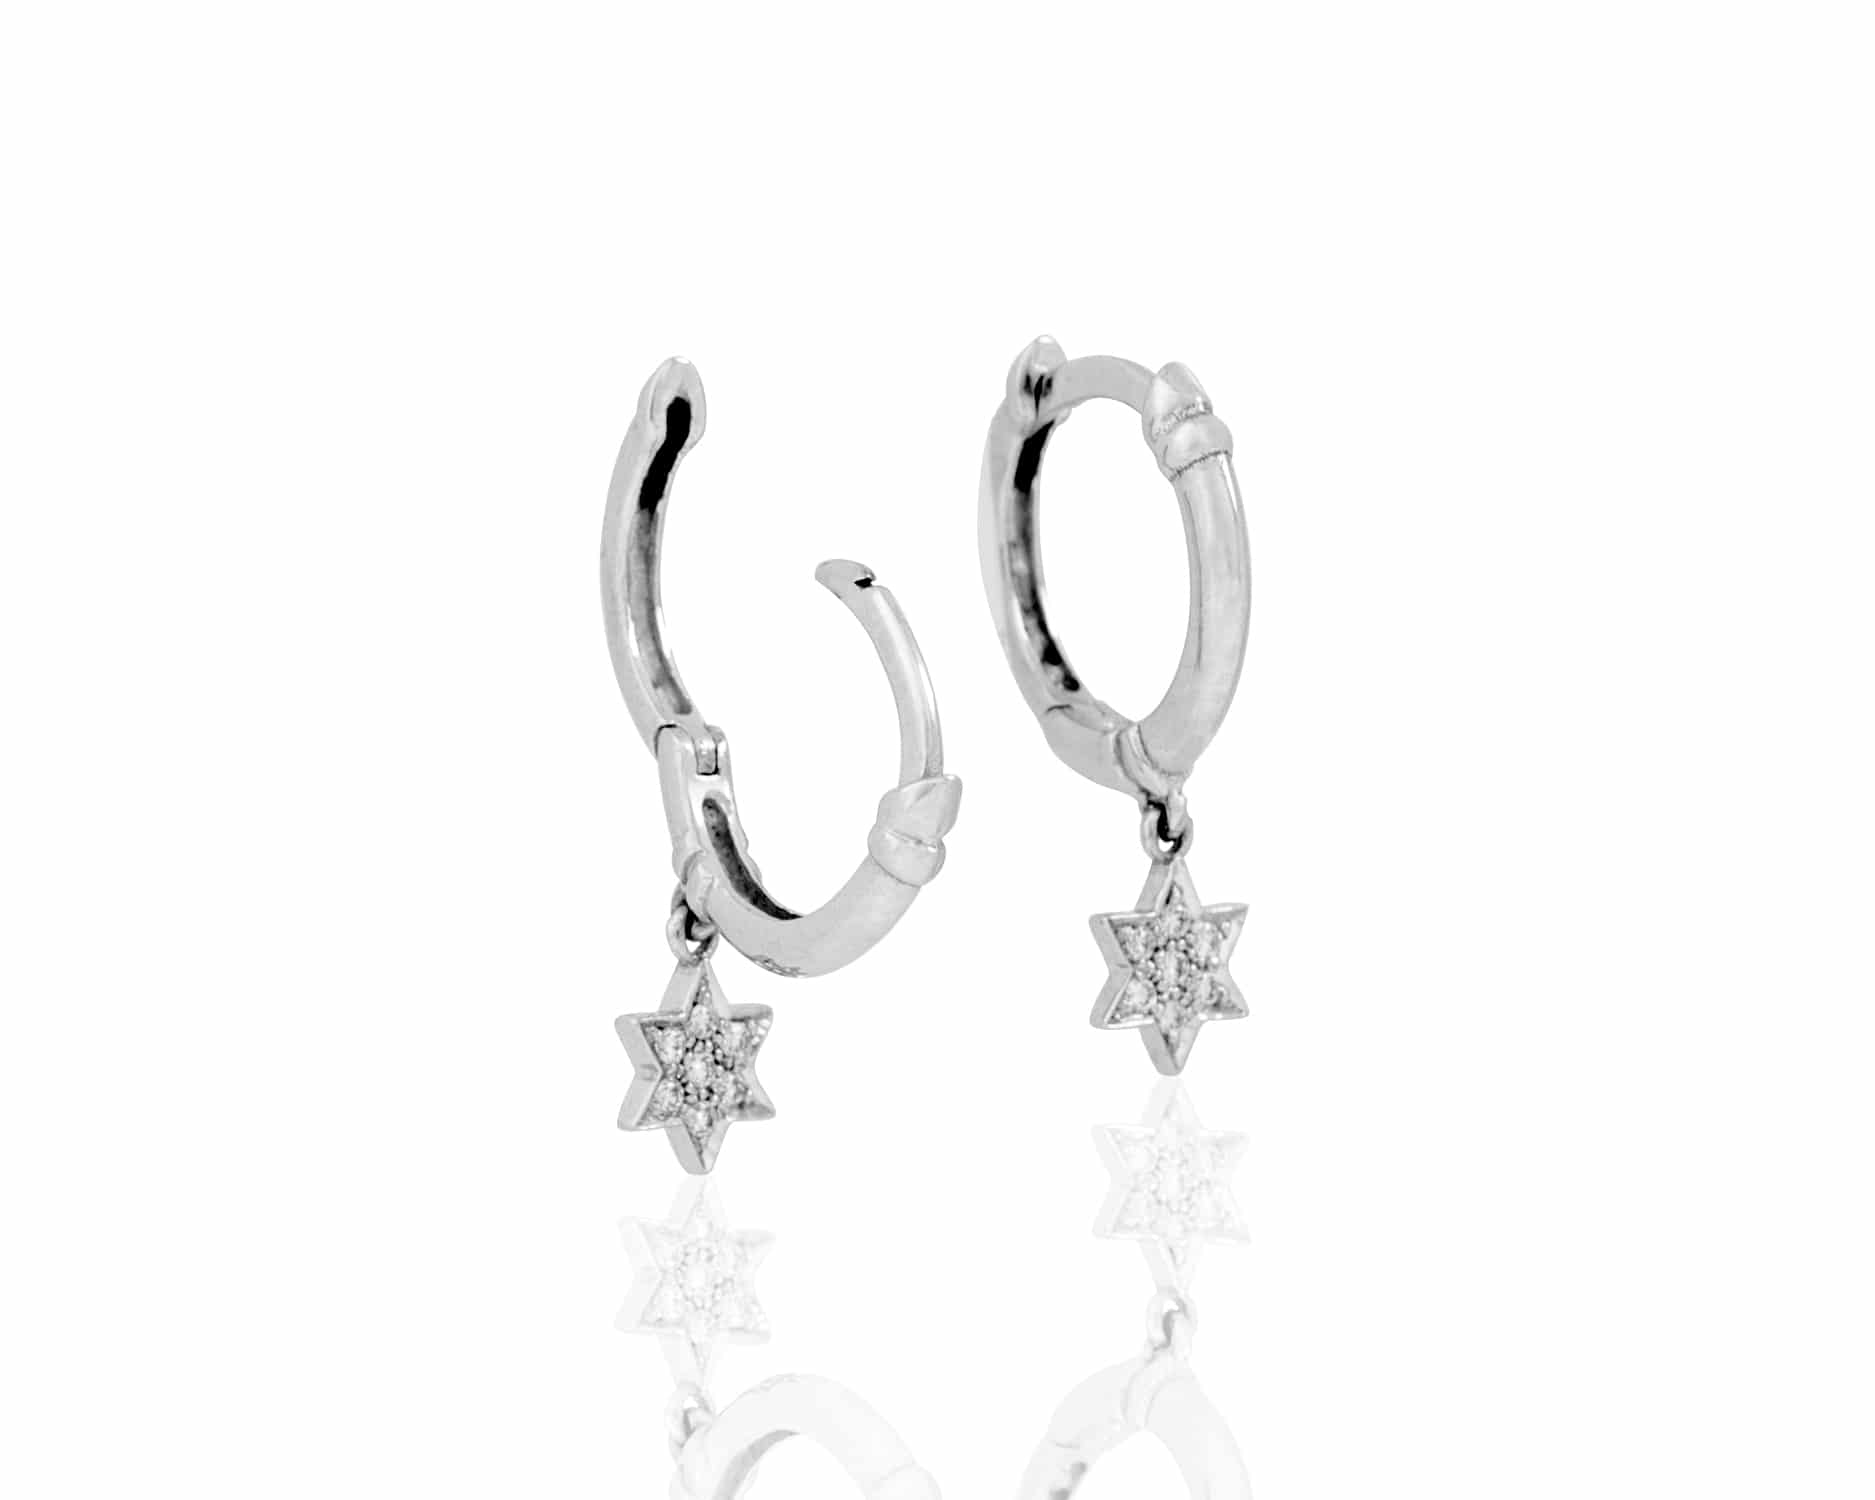 14k Gold and Diamonds Star of David Hoop Earrings